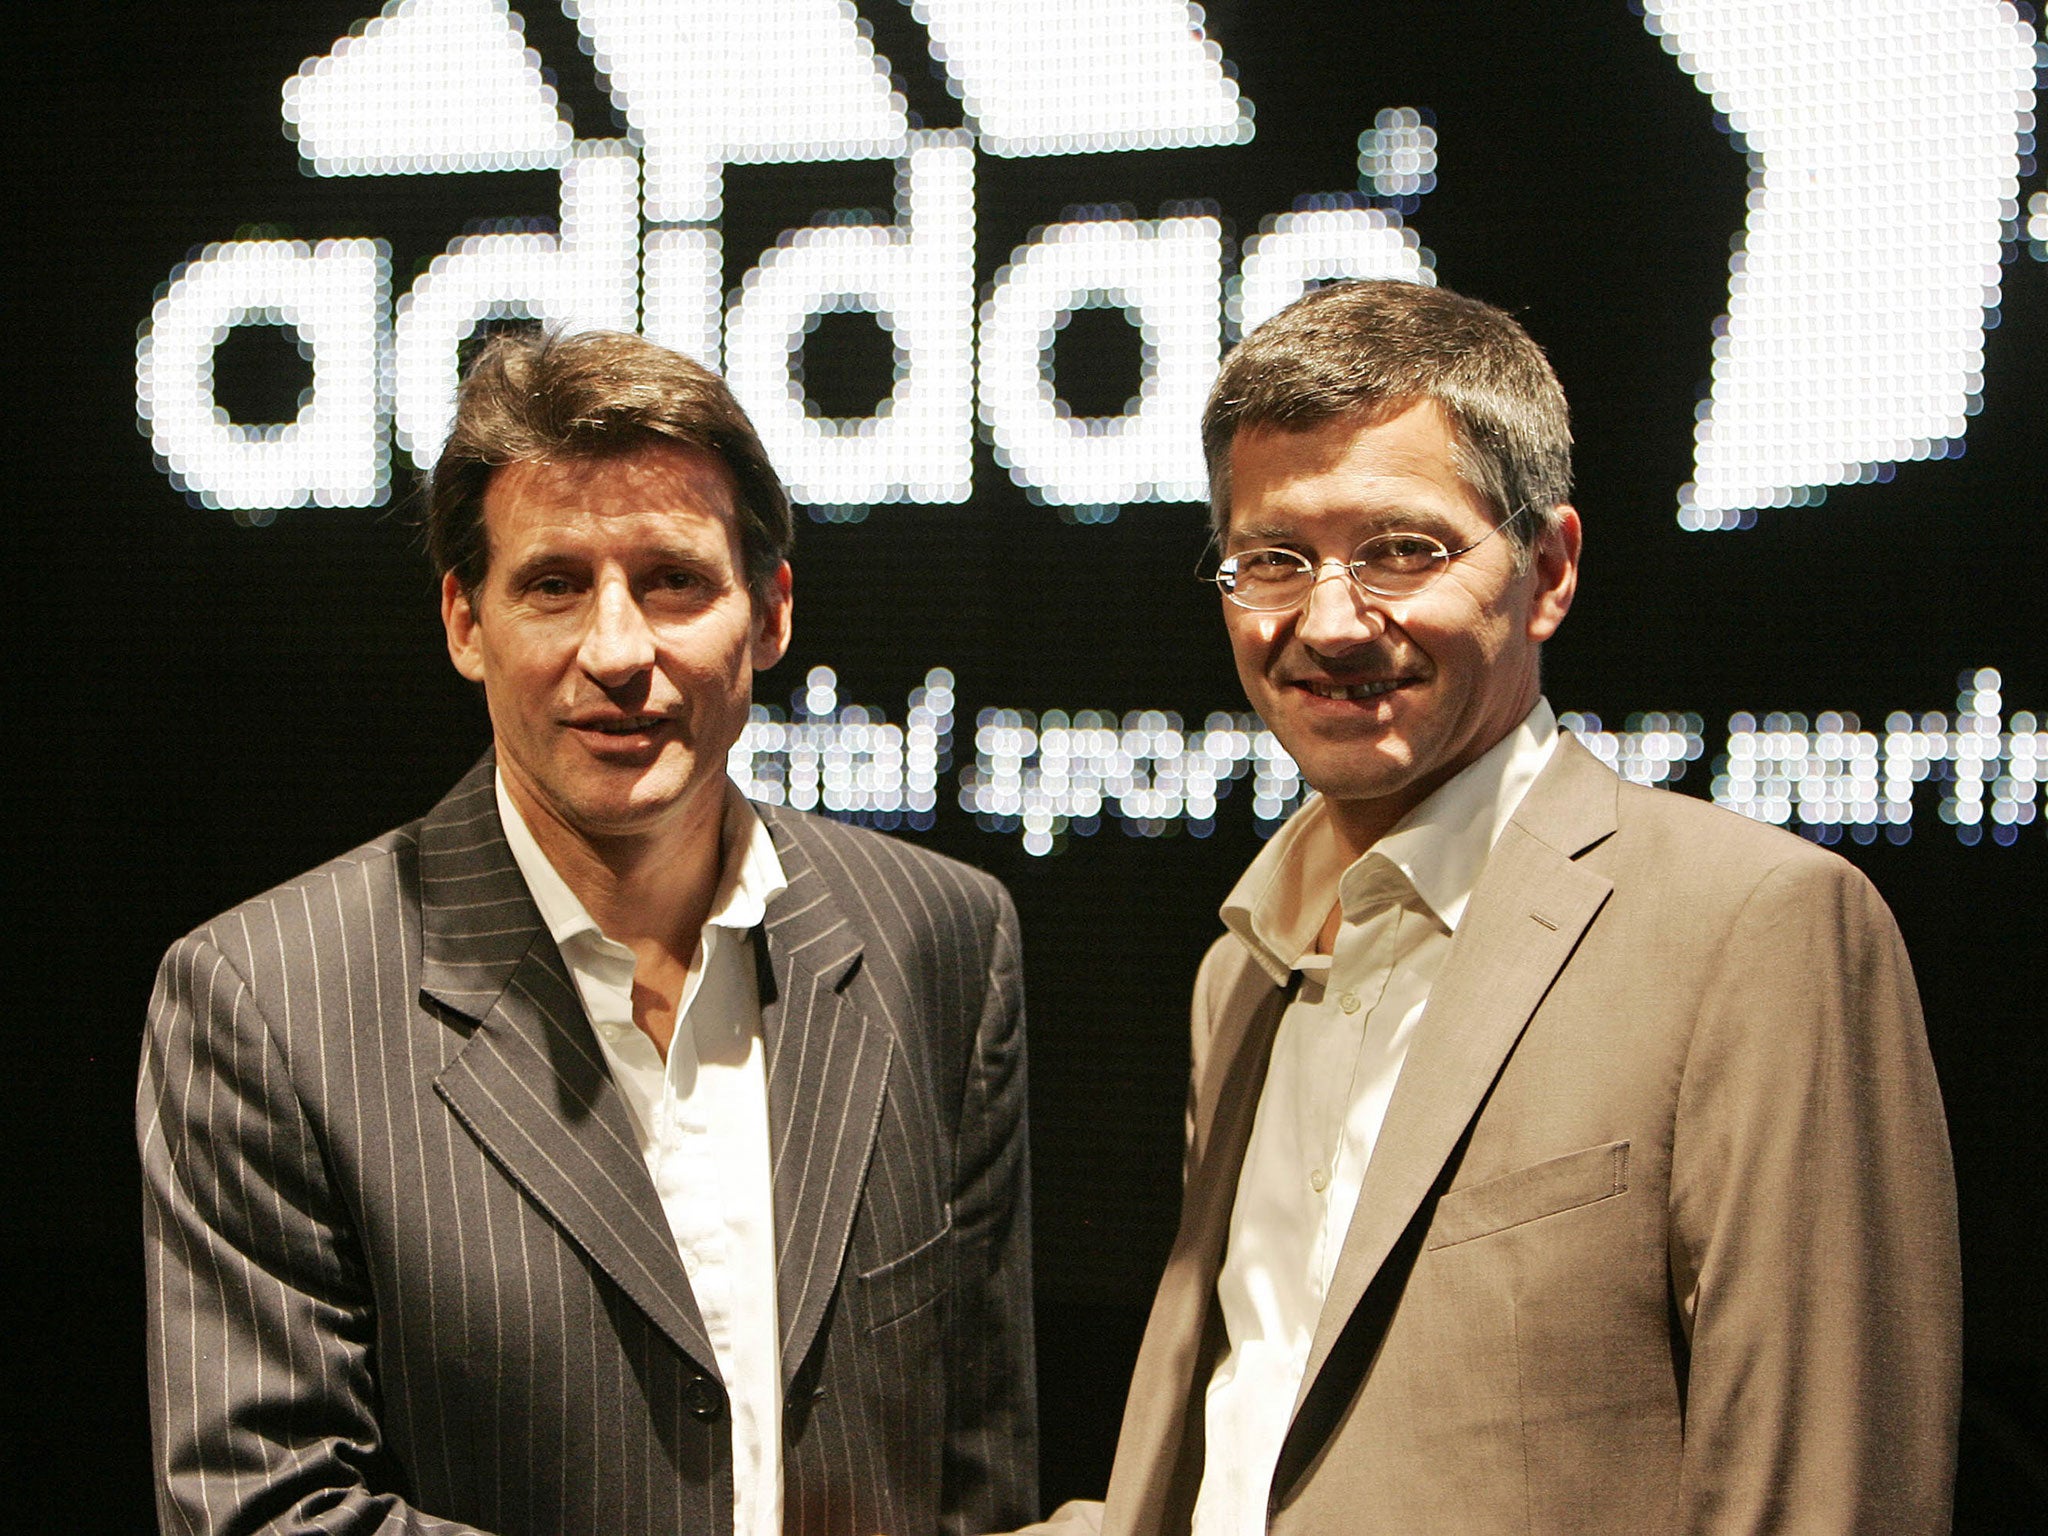 Lord Sebastian Coe and Adidas CEO Herbert Hainer in 2007